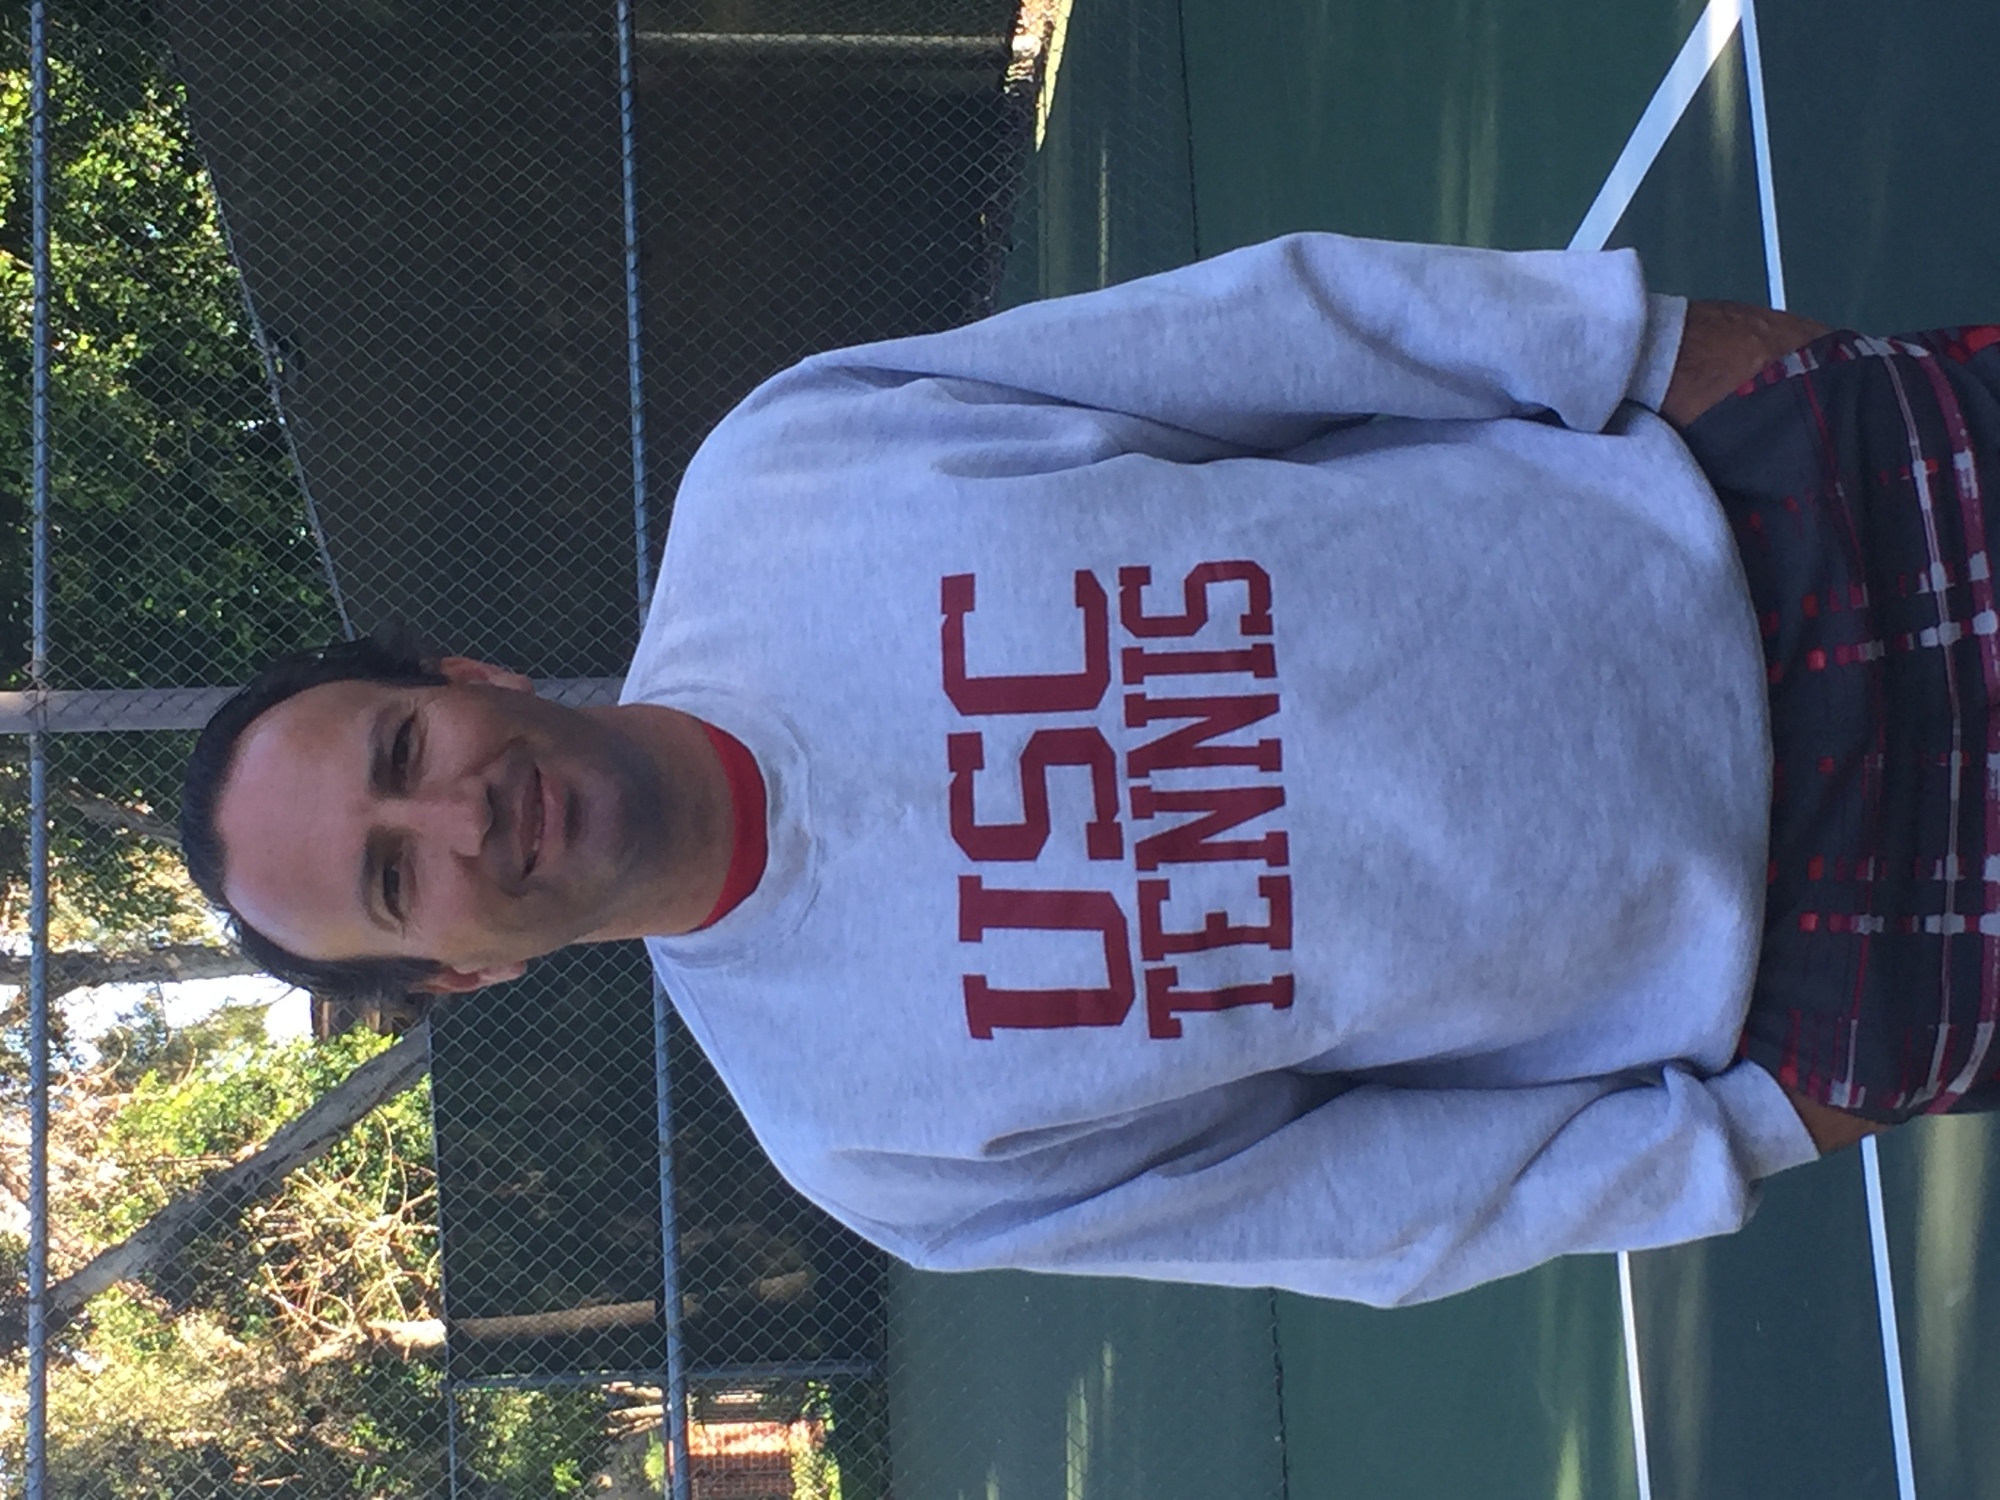 Alex V. teaches tennis lessons in Irvine, CA